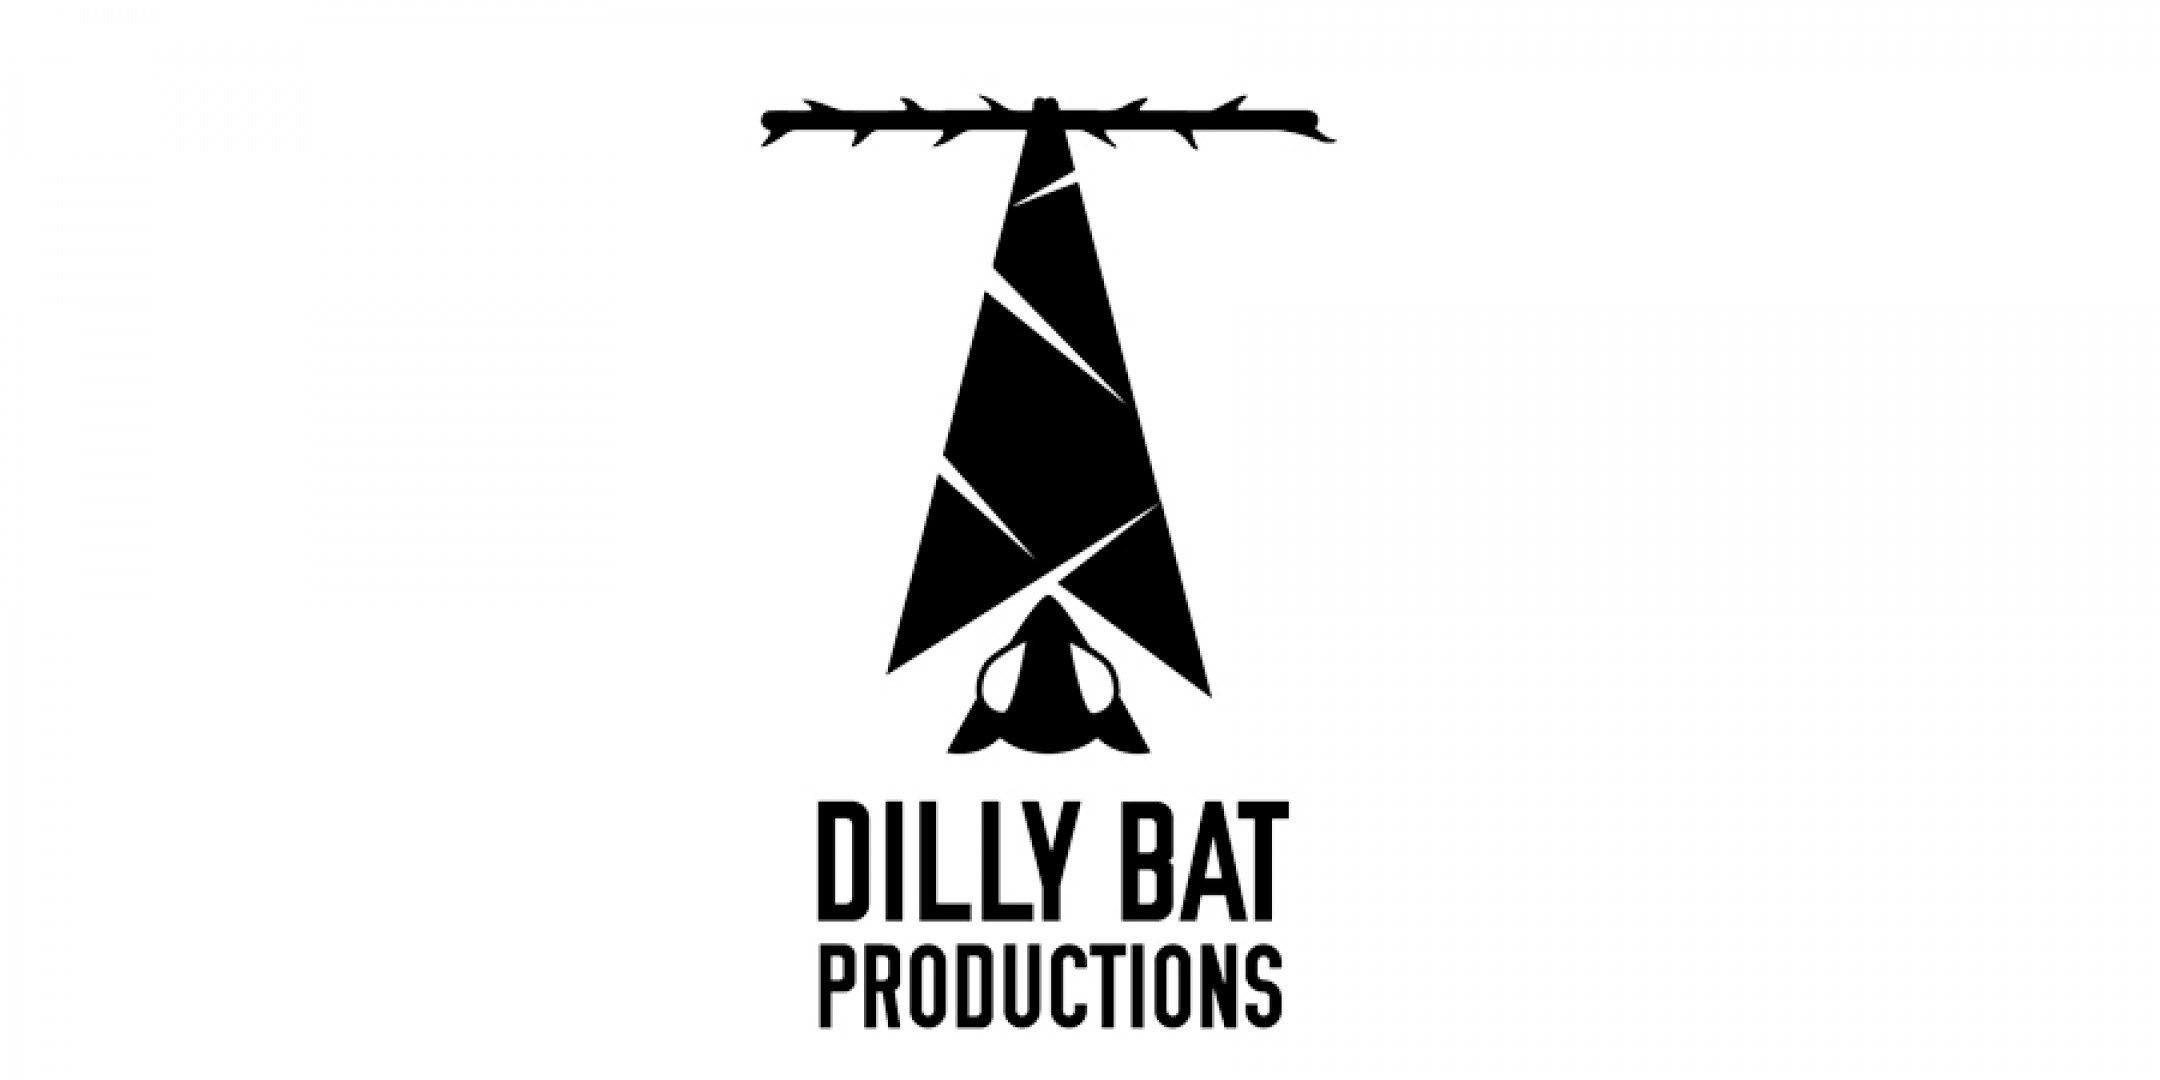 DillyBat Productions